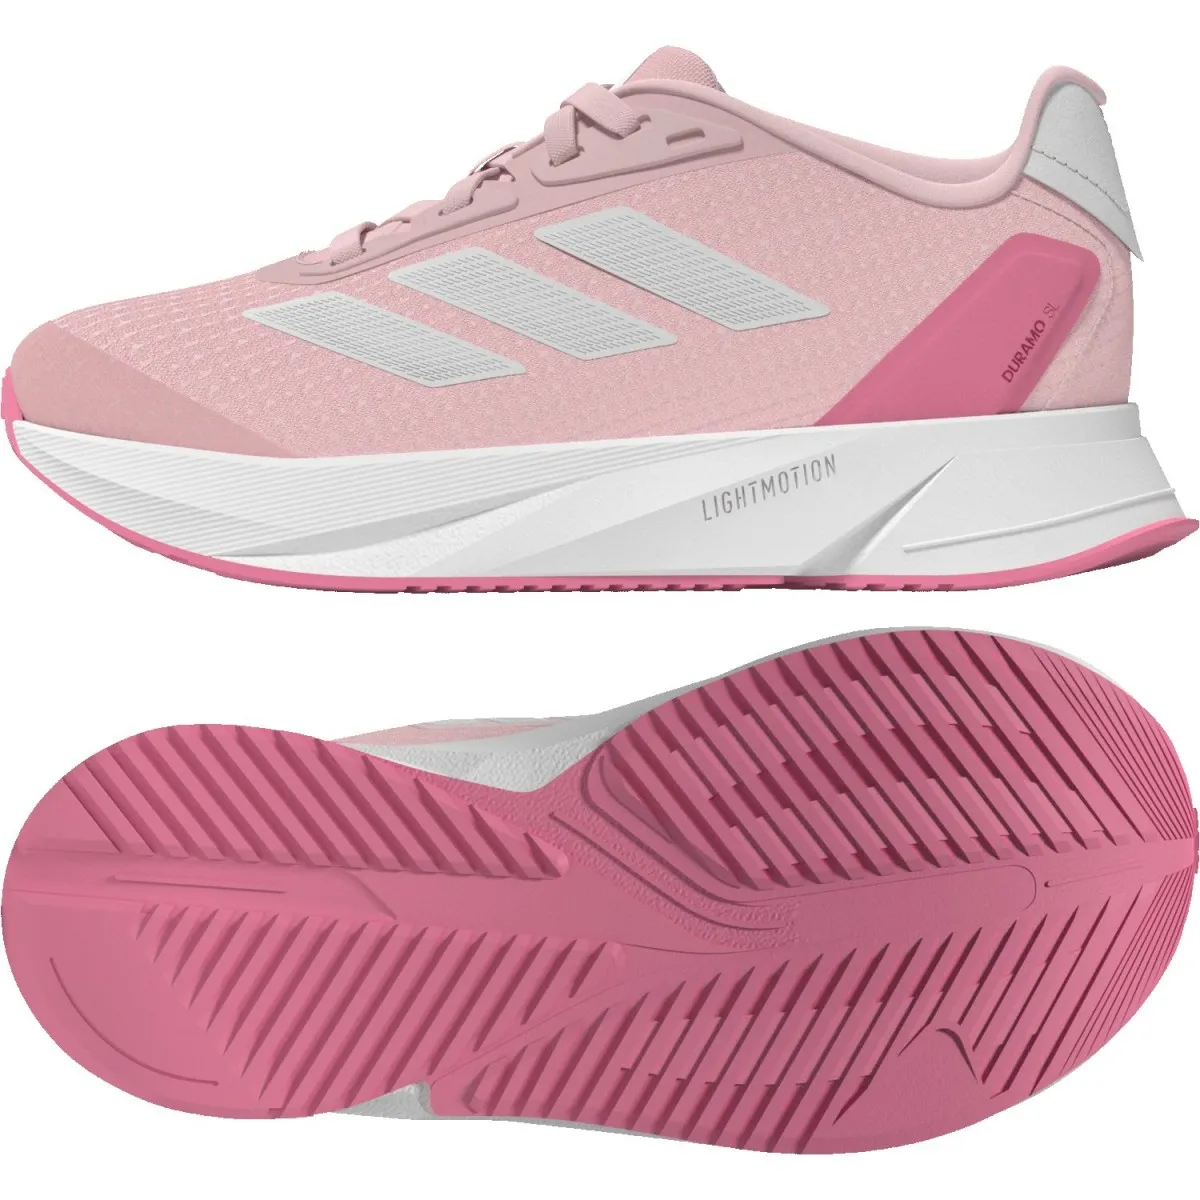 adidas Duramo superlight teen shoes pink